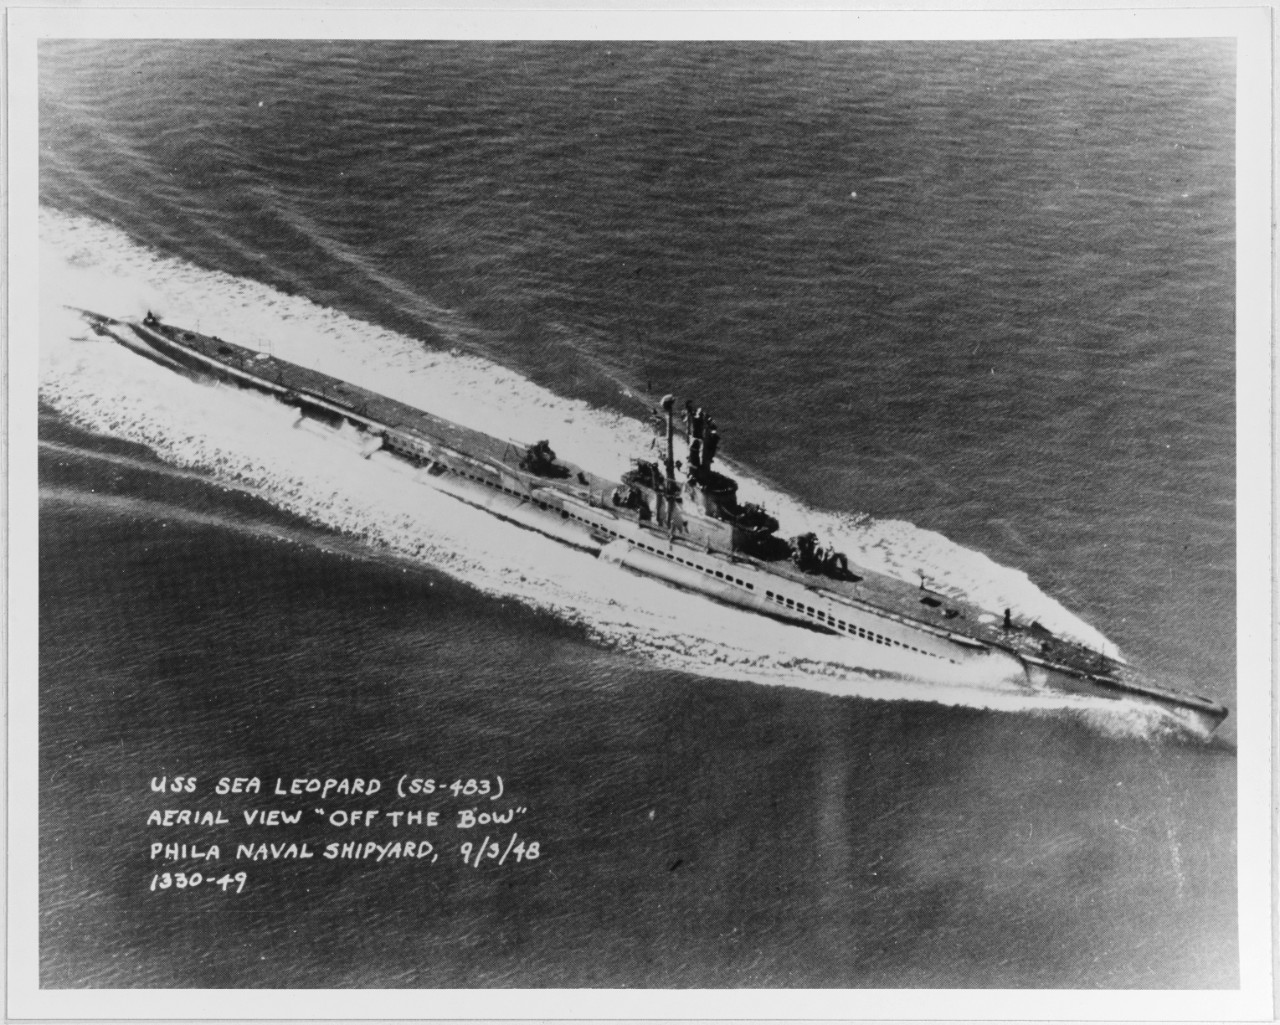 USS SEA LEOPARD (SS-483)